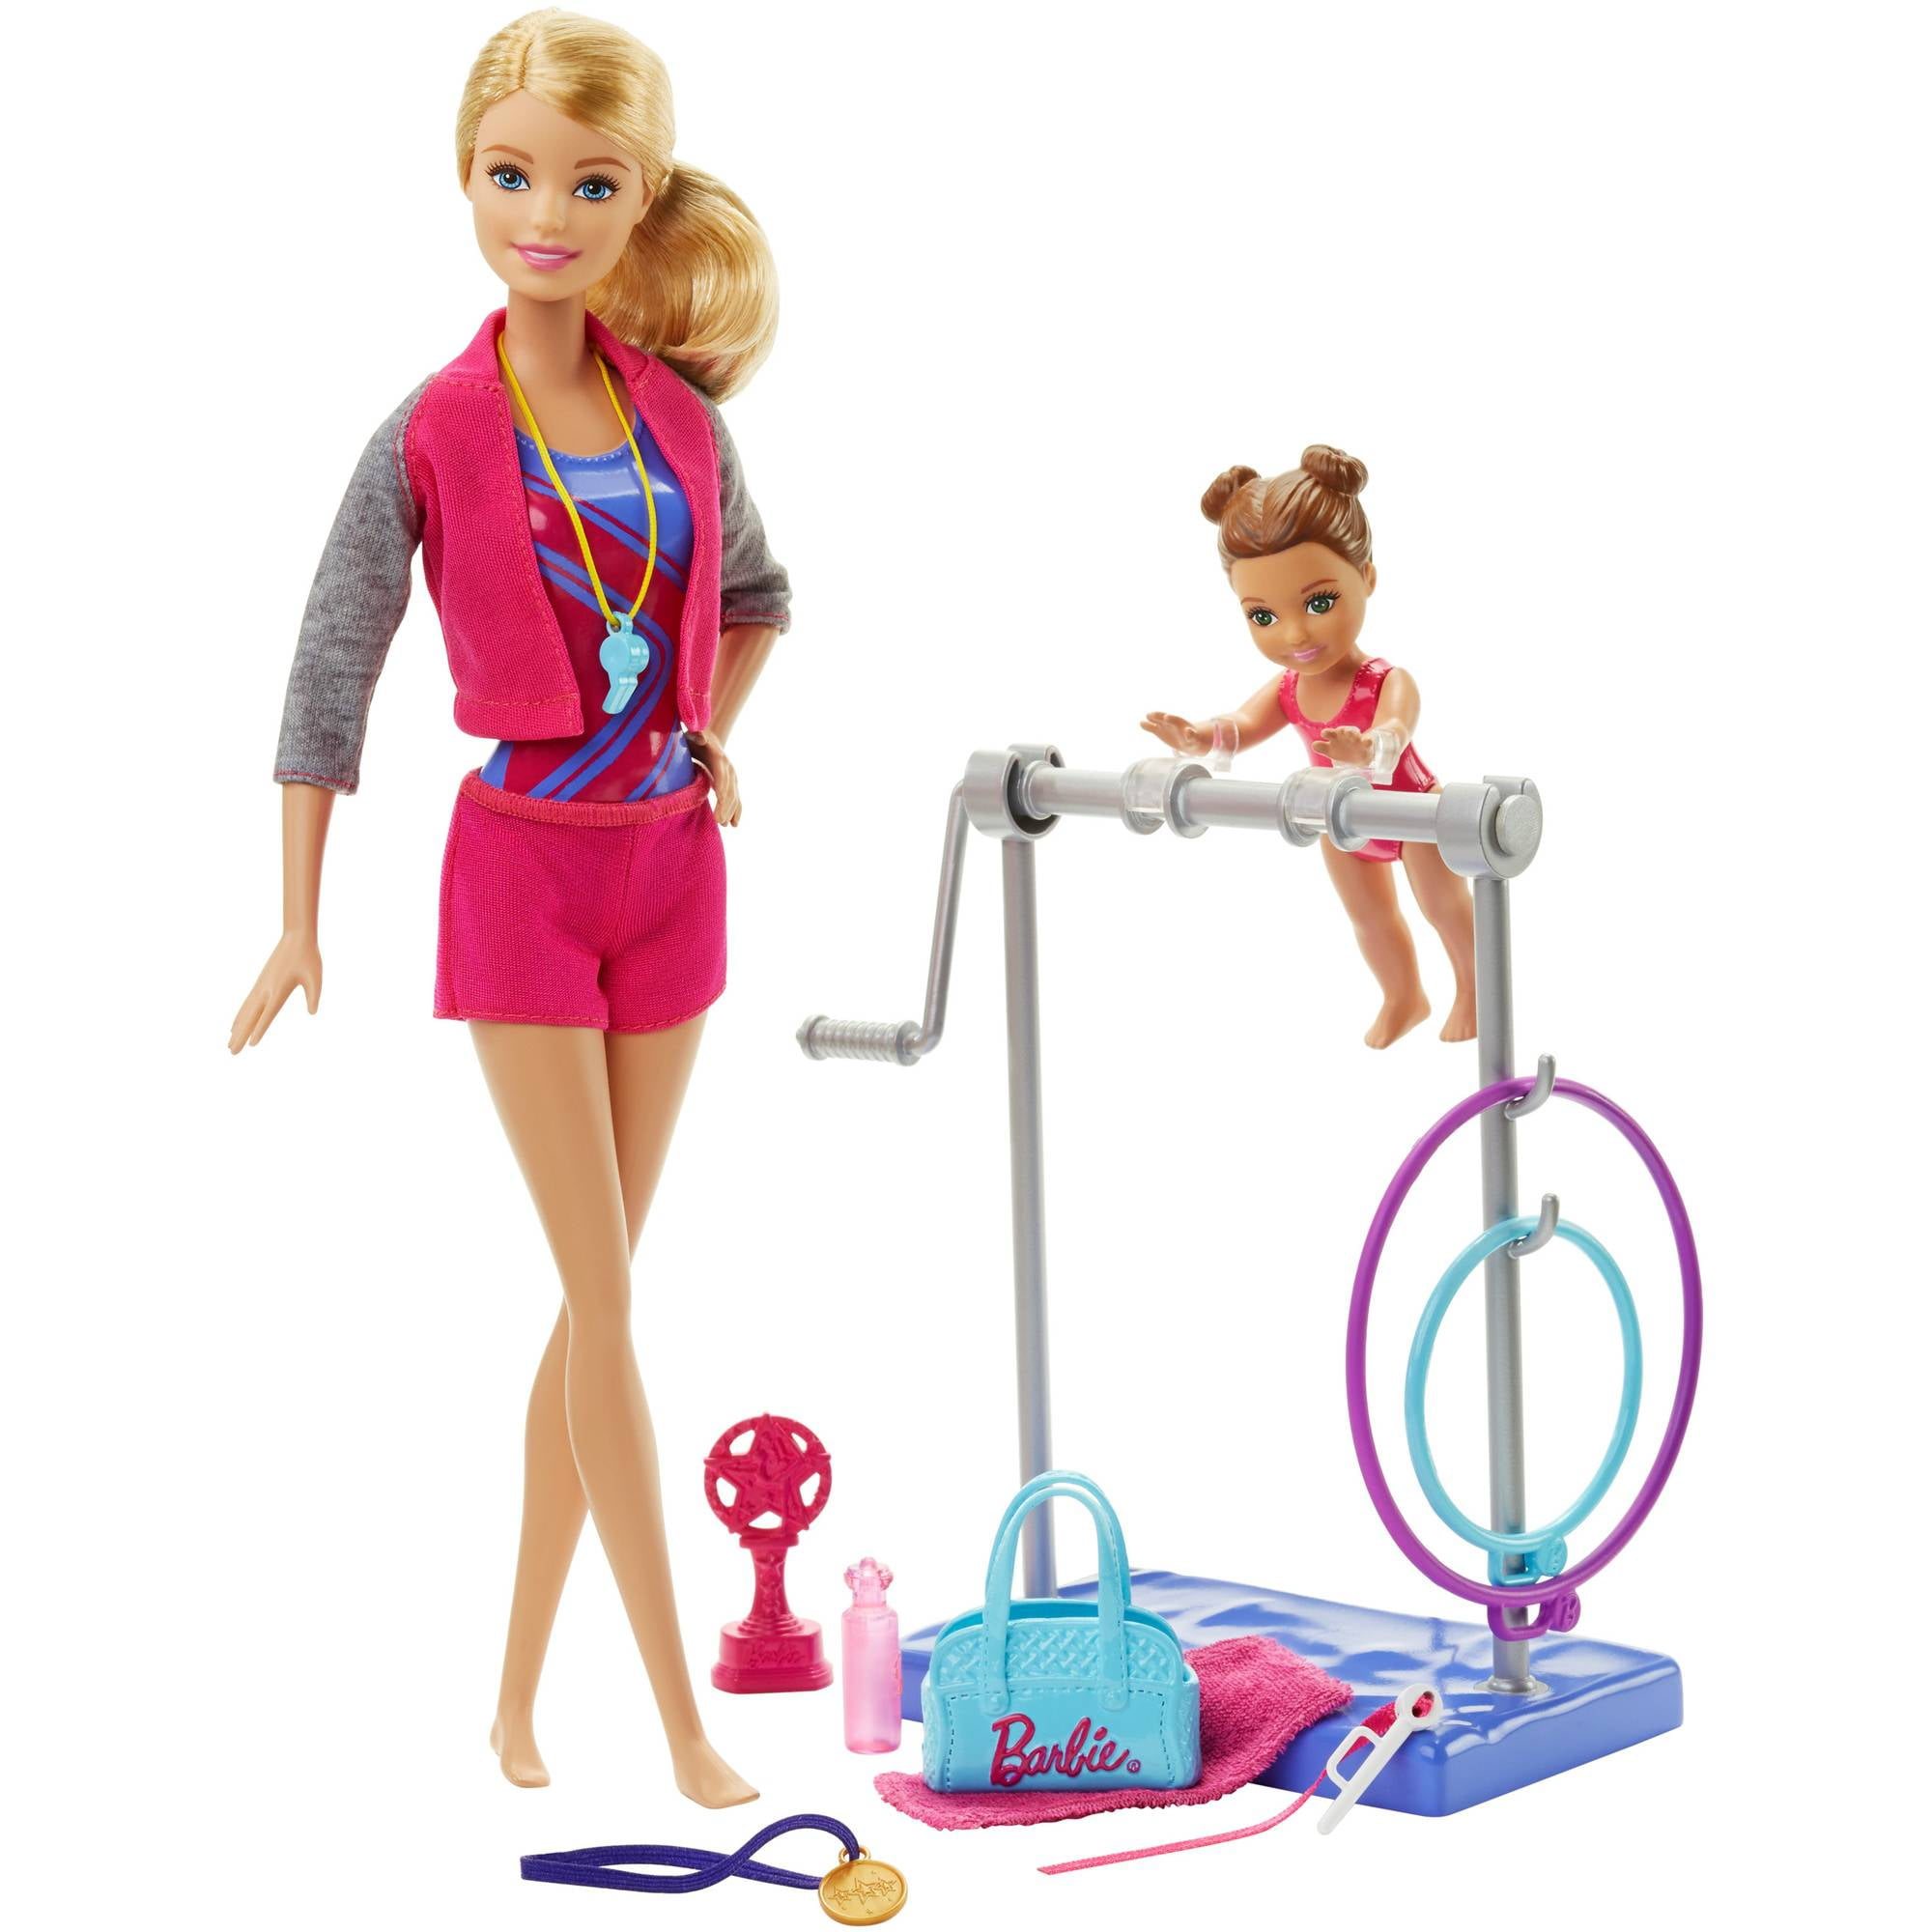 Barbie Gymnastic Doll and Playset - Walmart.com